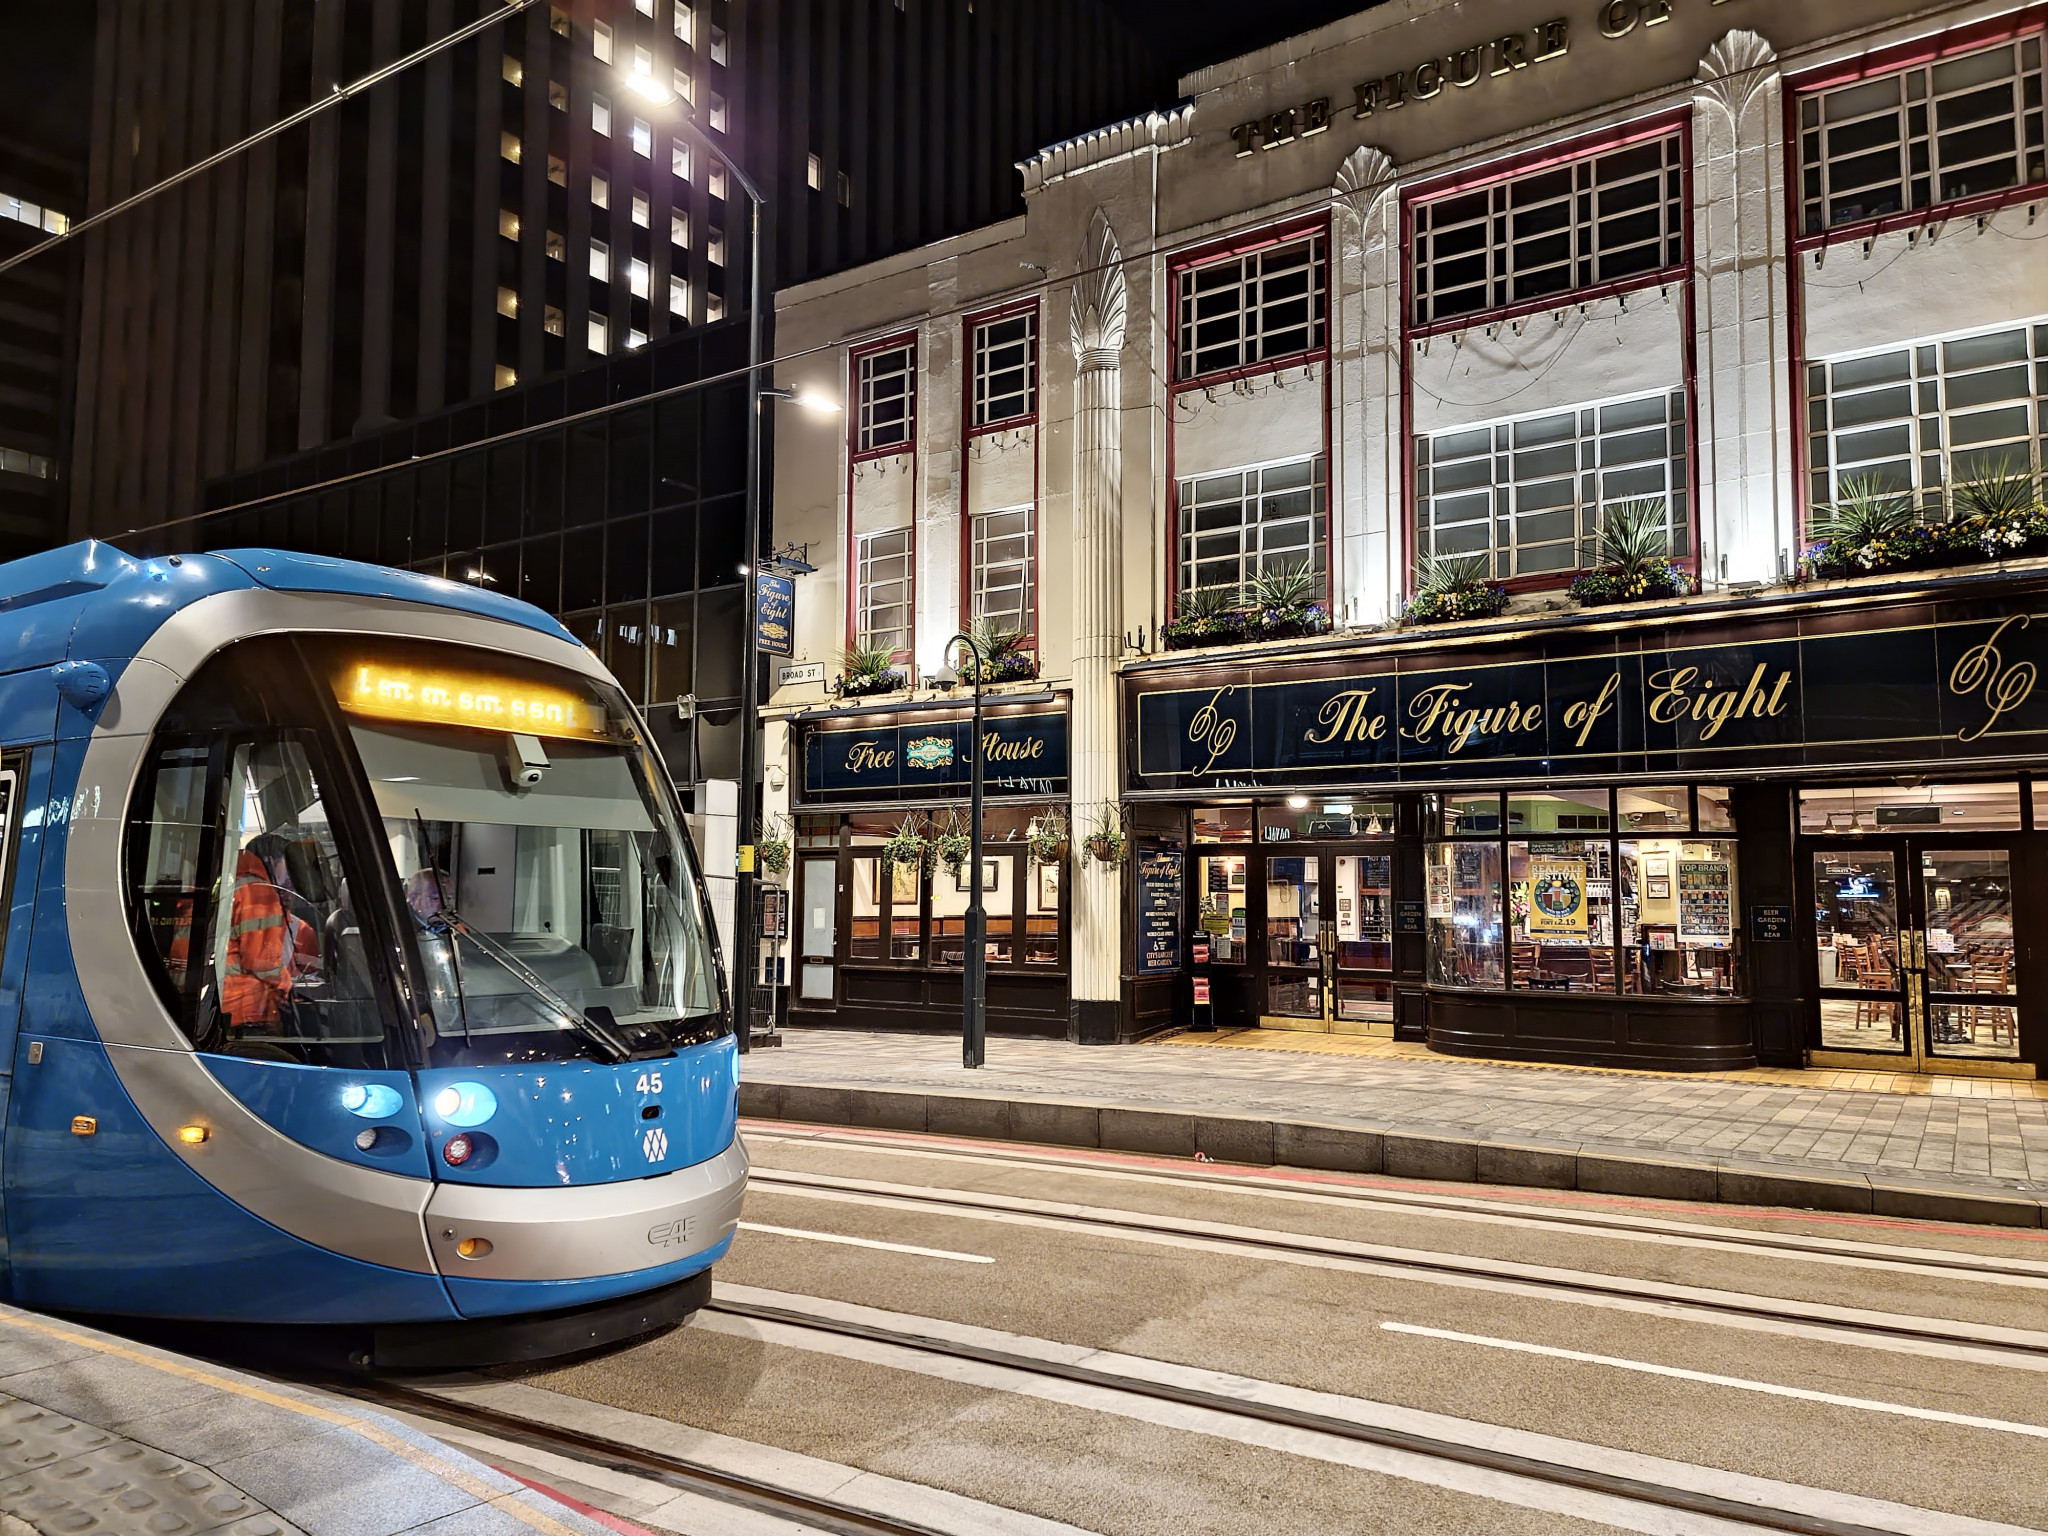 Major transport boost for Birmingham 2022 as final preparations begin